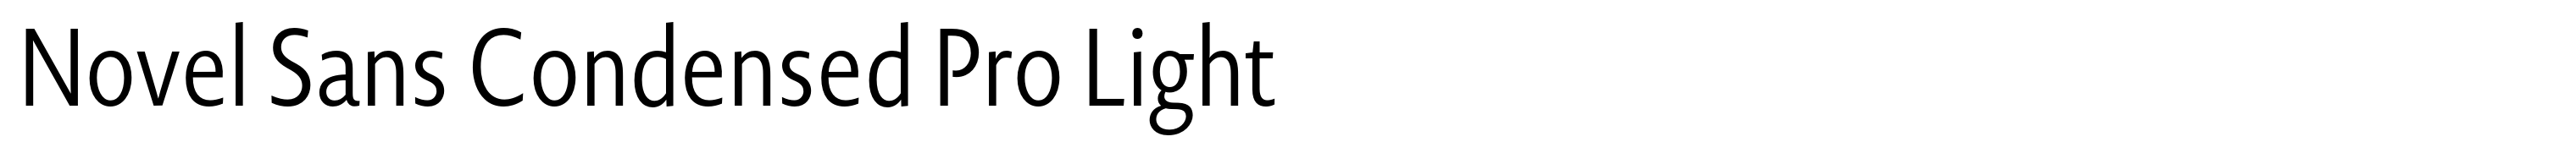 Novel Sans Condensed Pro Light